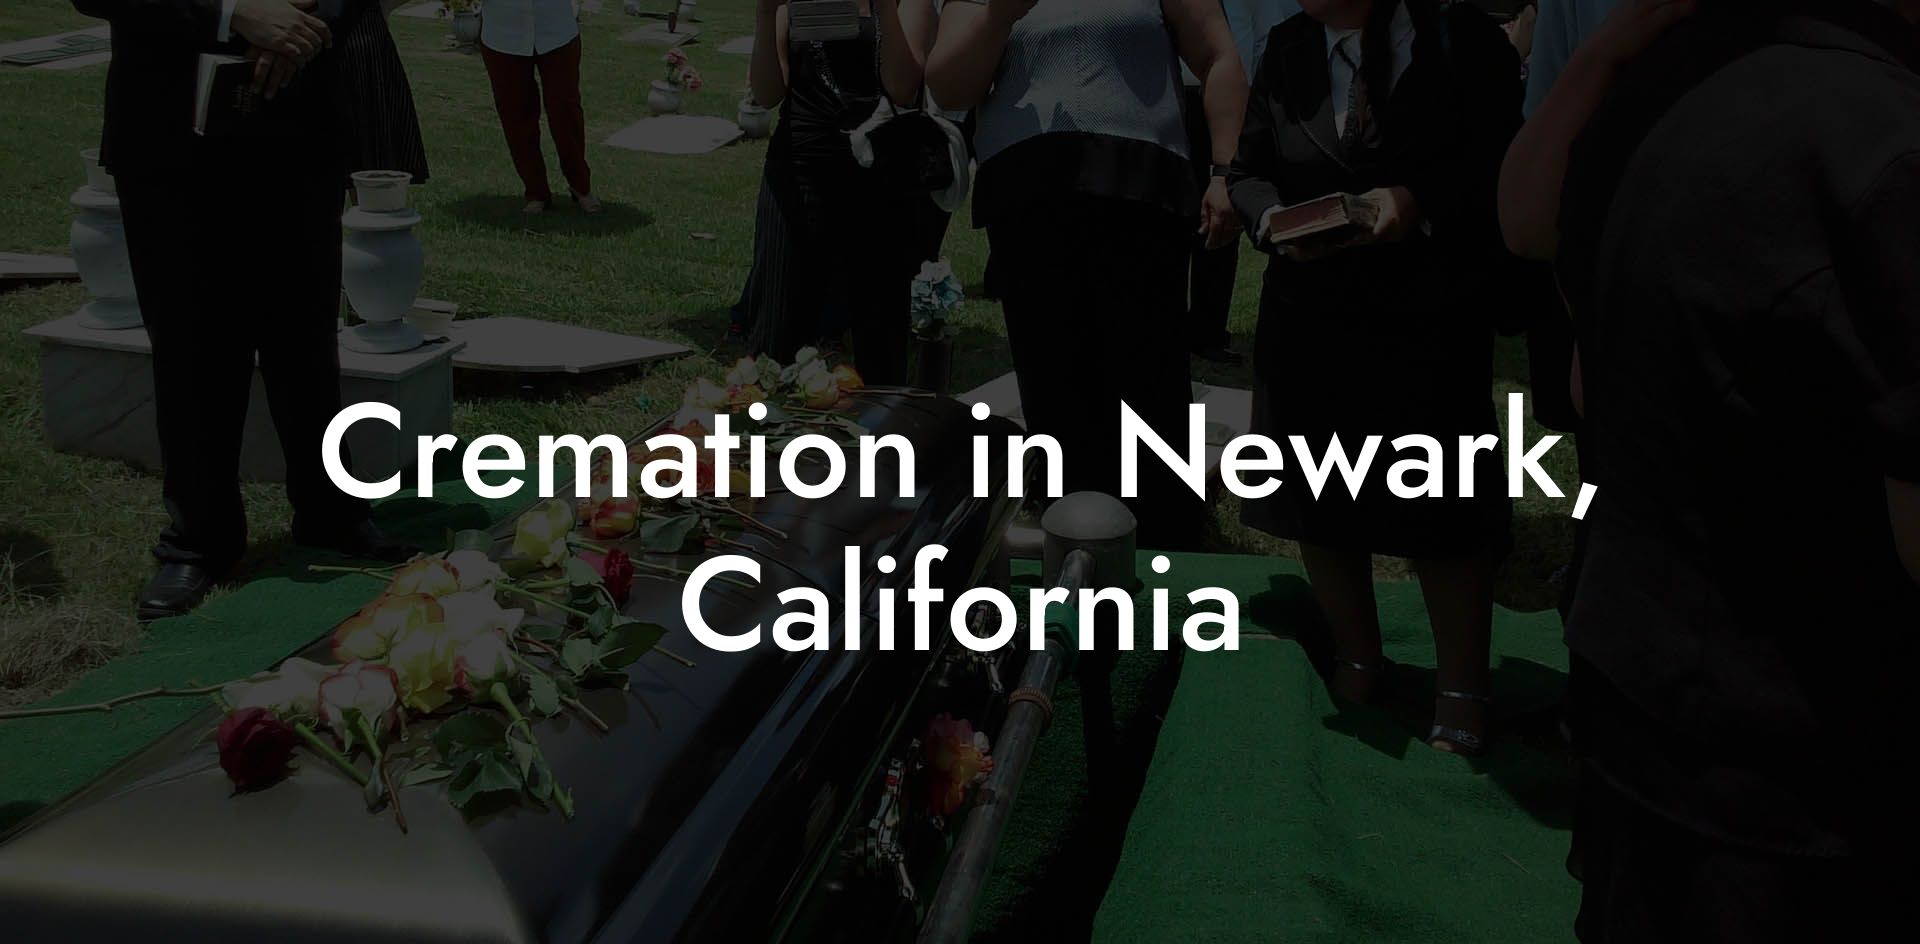 Cremation in Newark, California